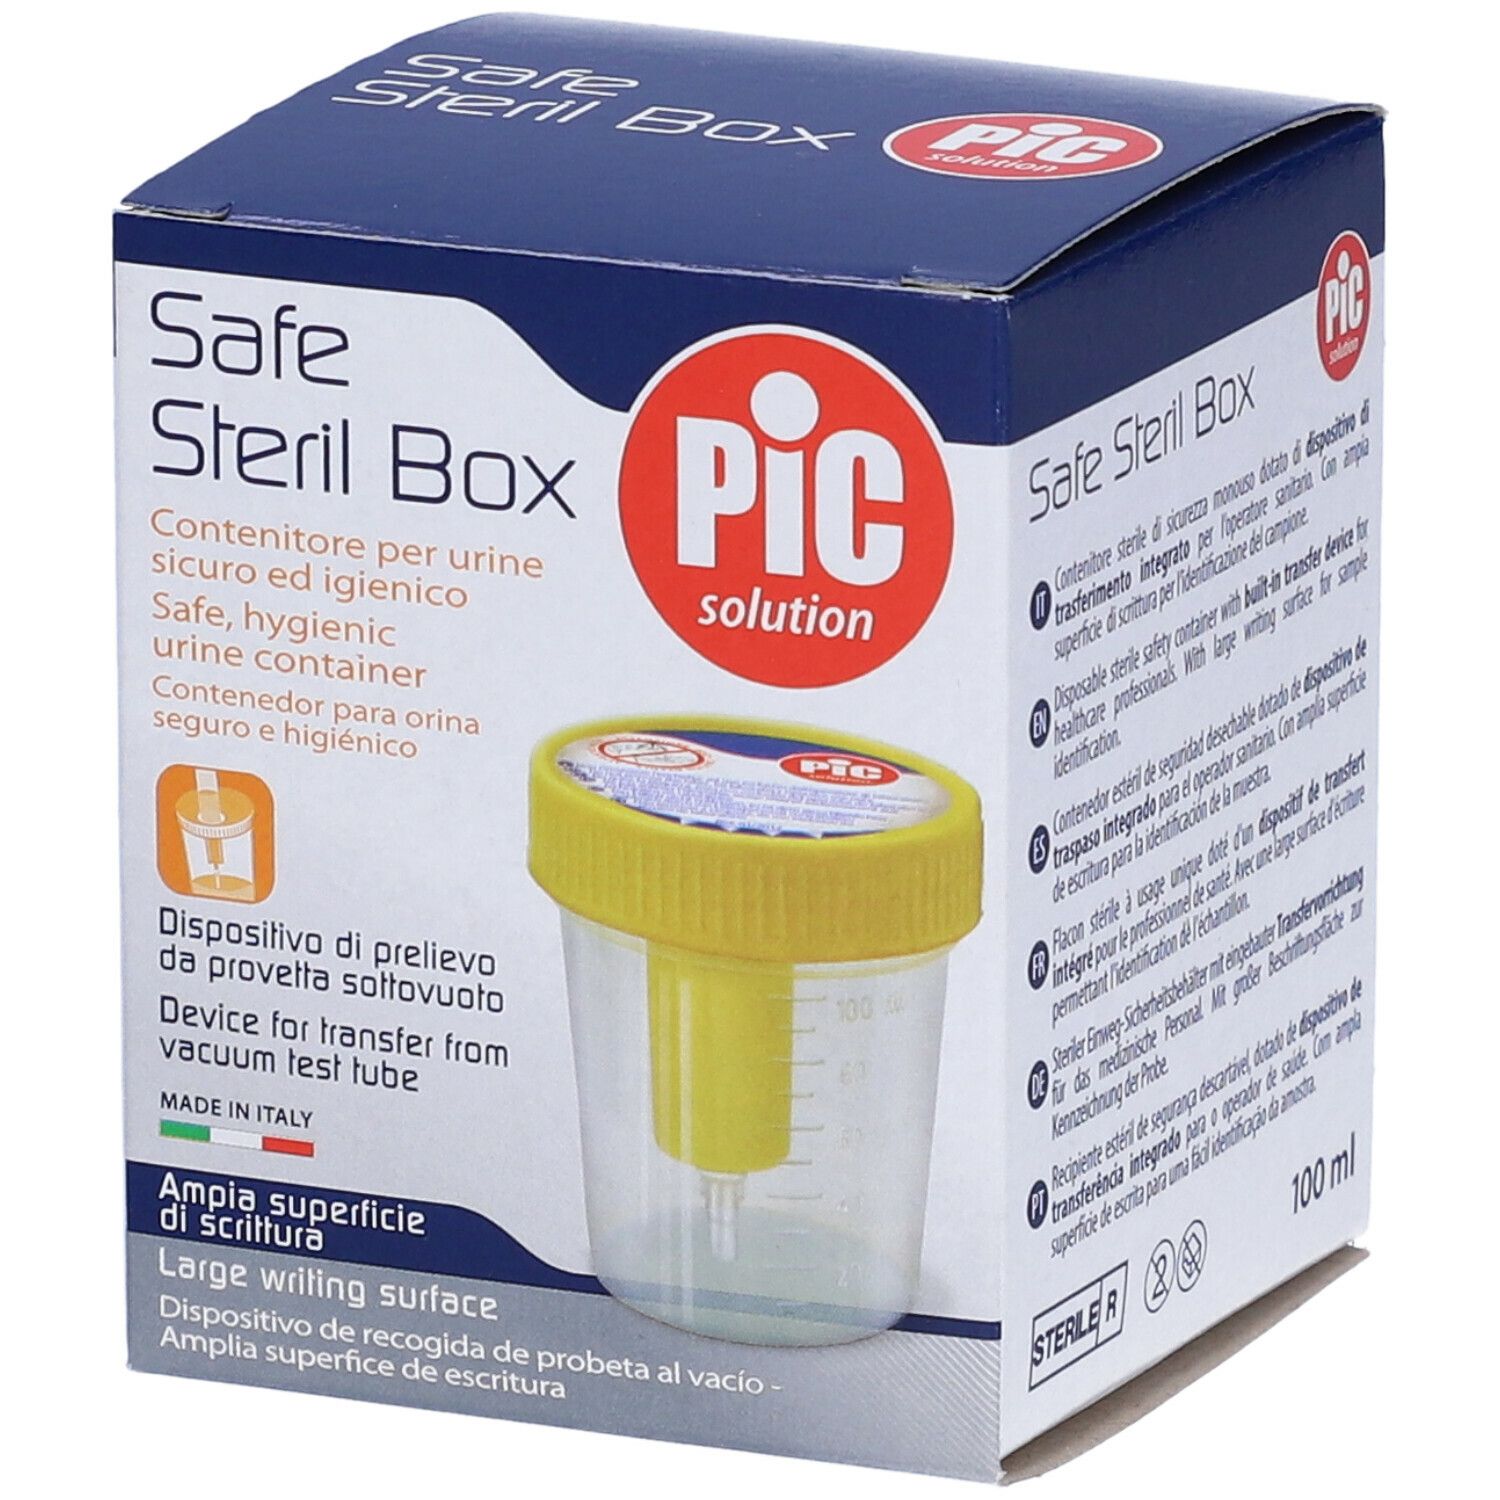 Pic Bicchierino Safe Steril Box